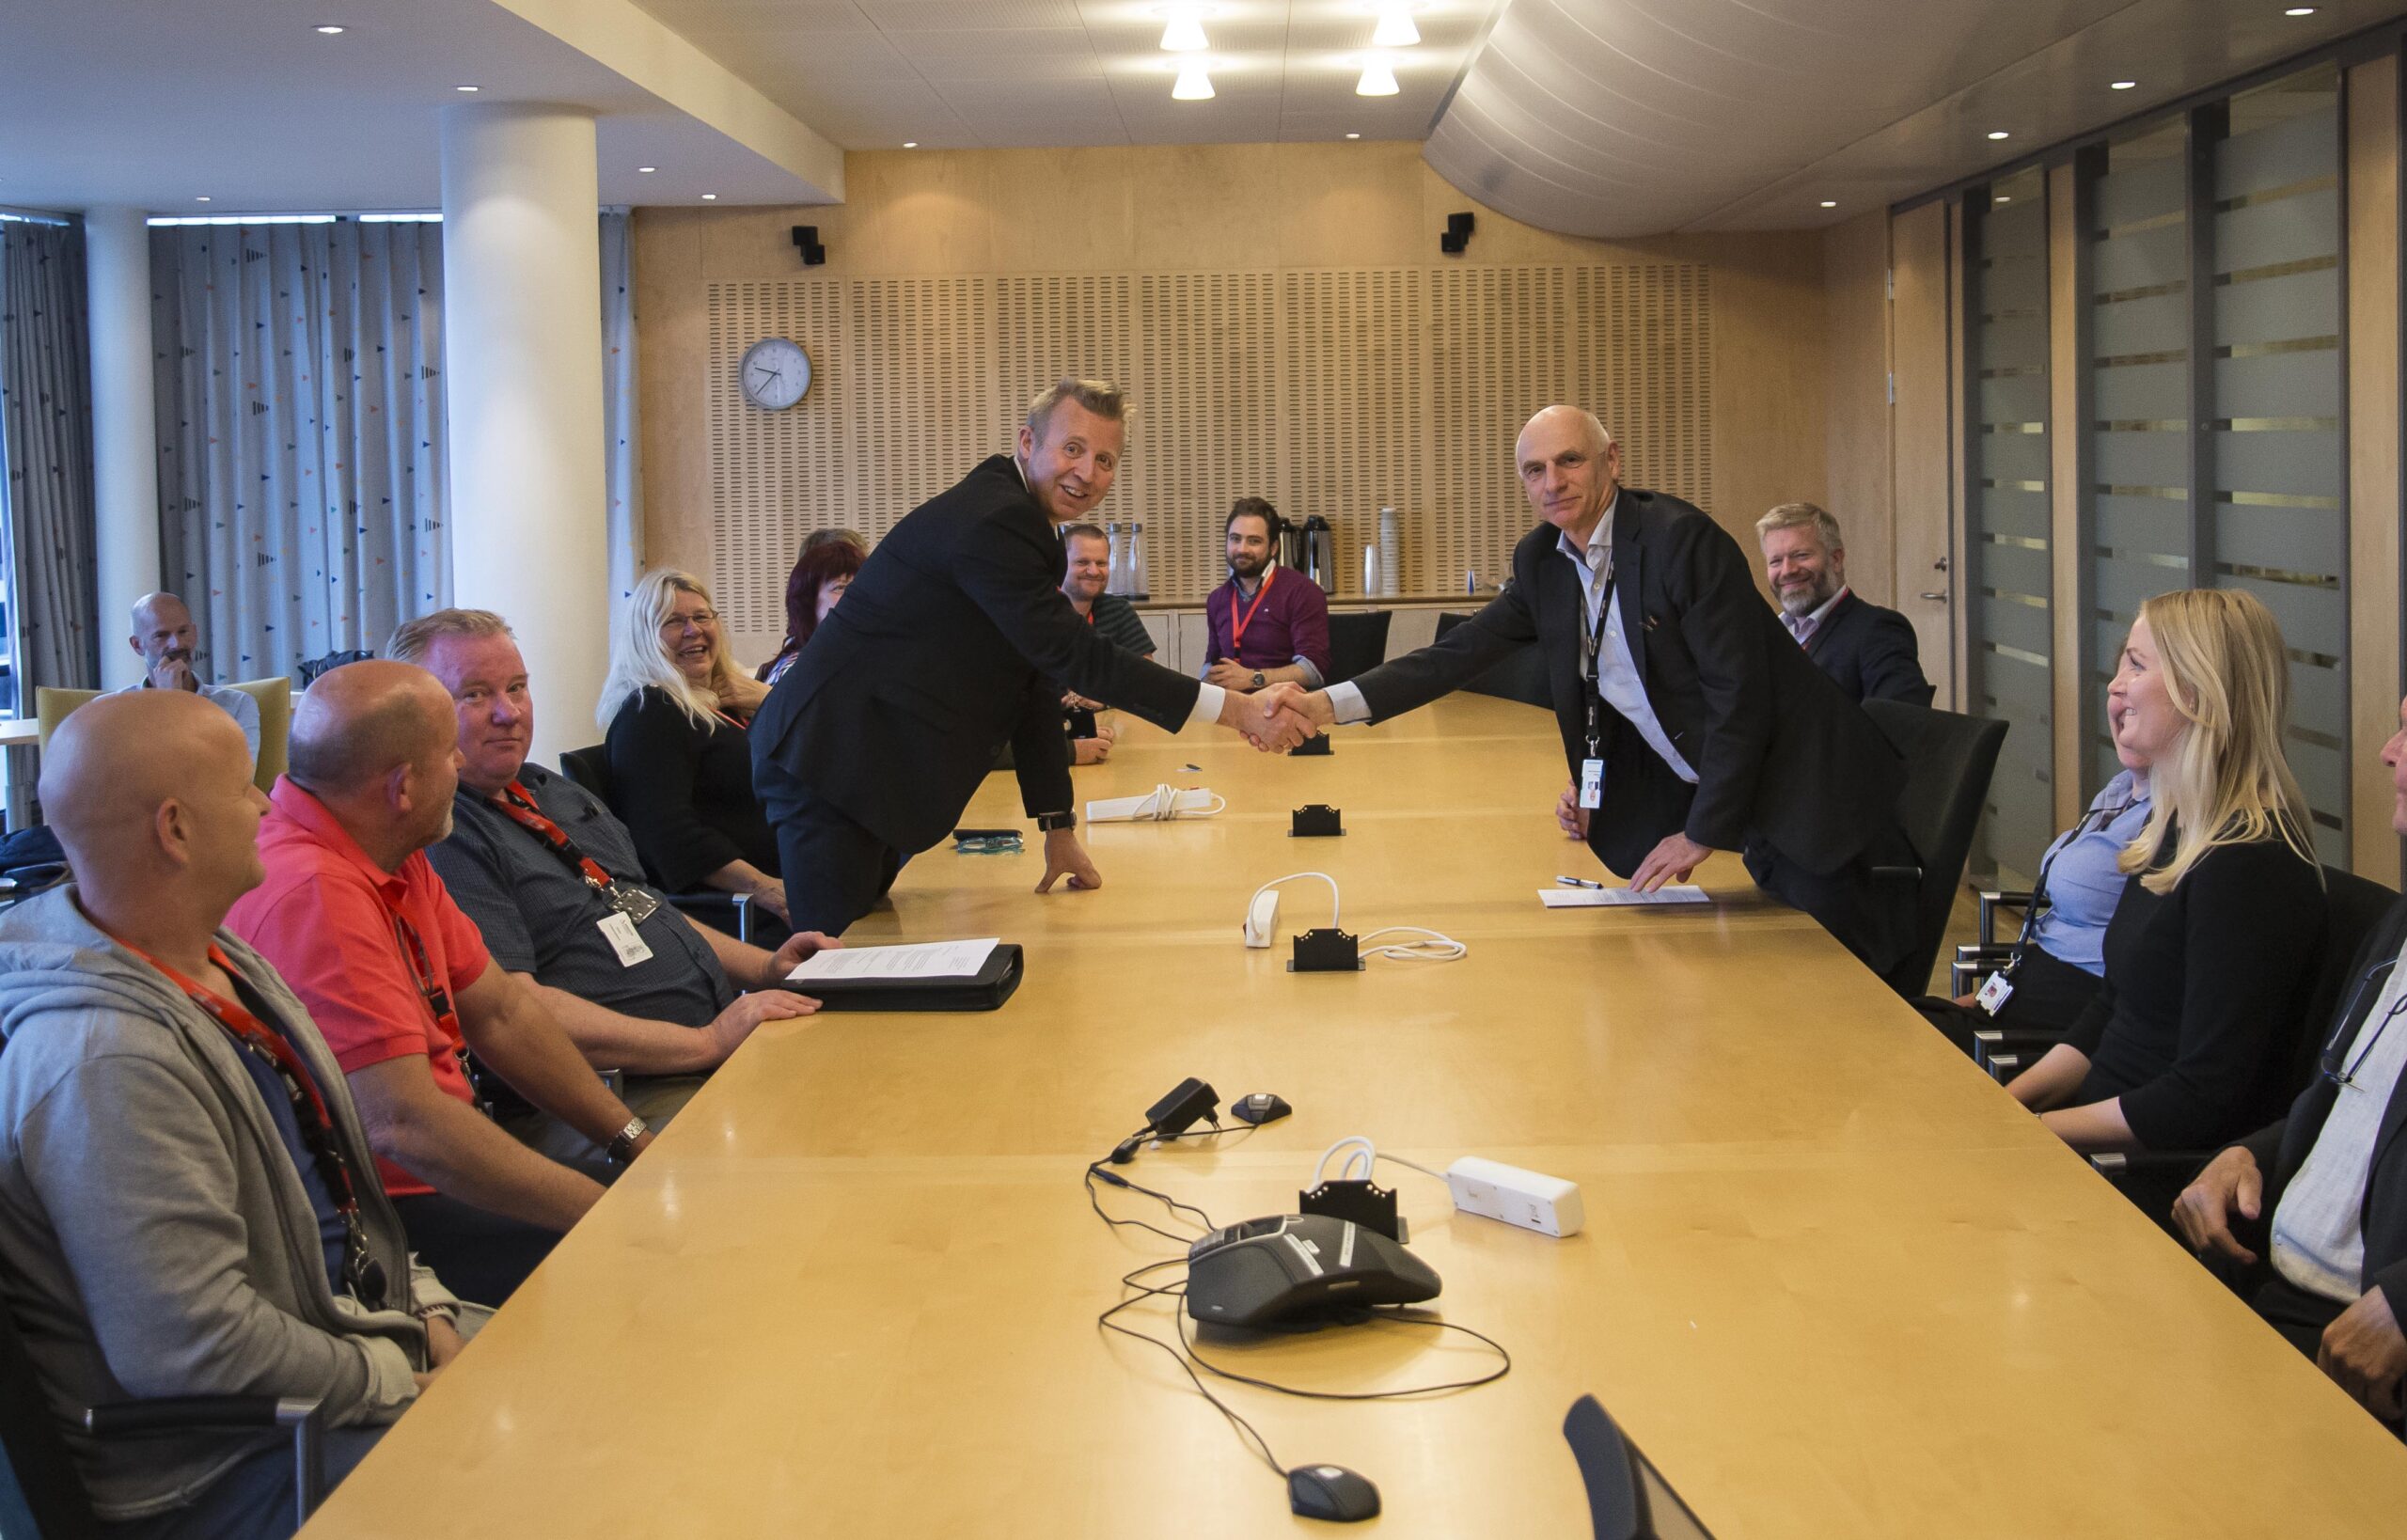 Forhandlingslederne Frode Alfheim i Industri Energi (tv) og Jan Hodneland i Norsk olje og gass kom til enighet i oljeserviceforhandlingene. Foto: Atle Espen Helgesen